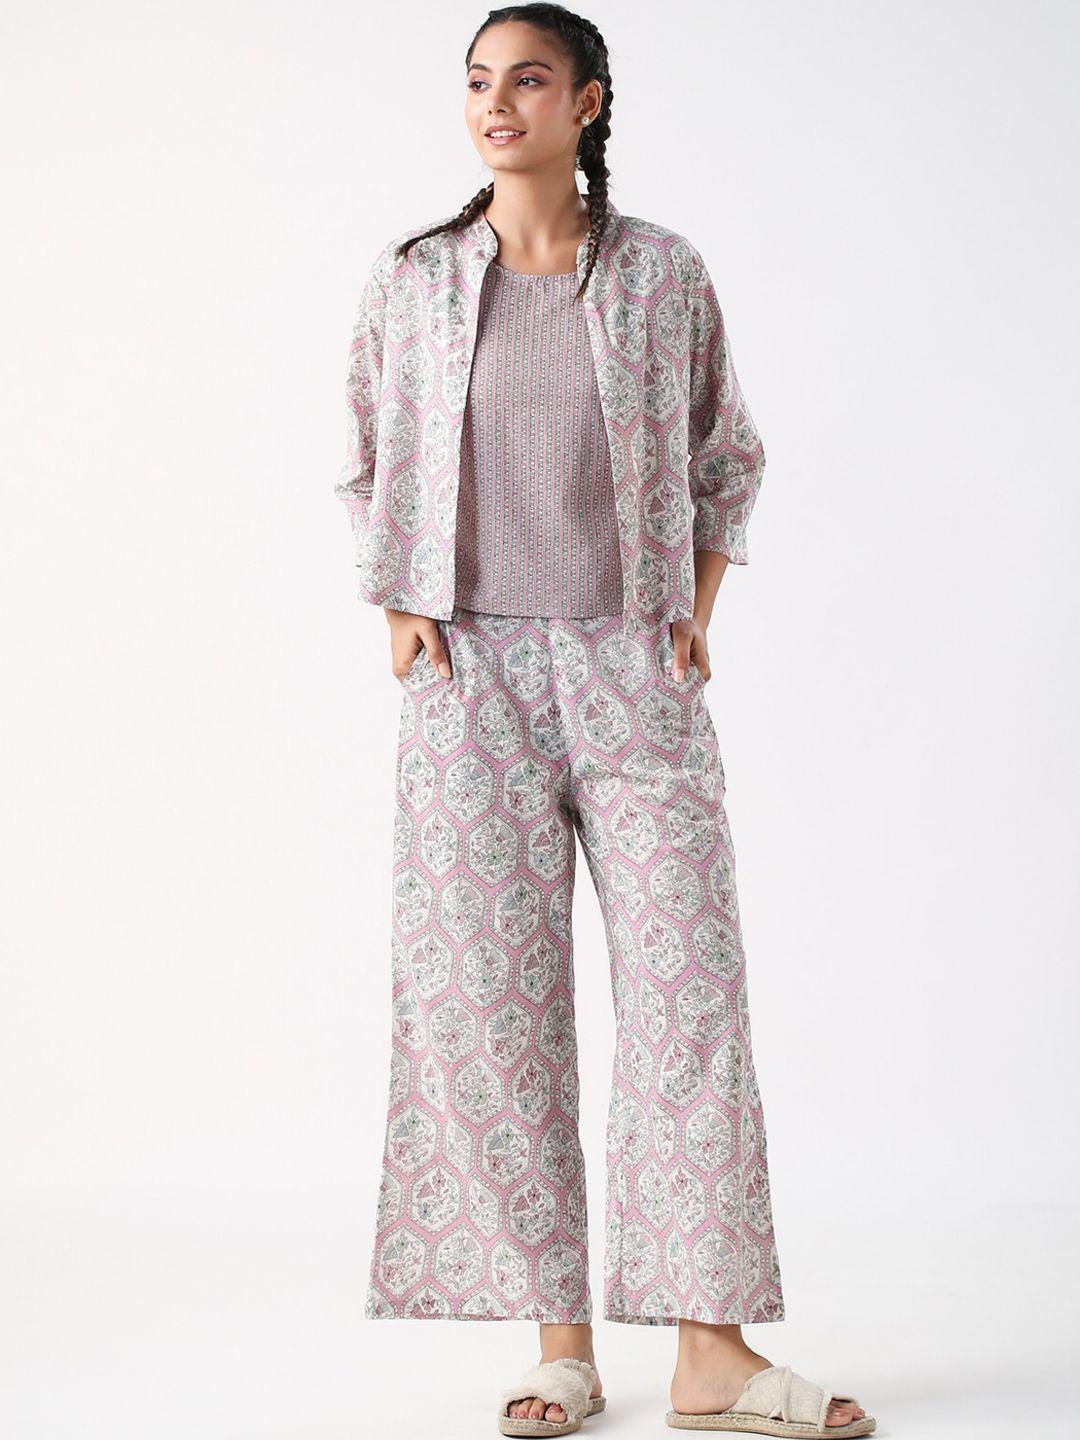 jisora-off-white-&-pink-printed-pure-cotton-3-piece-night-suit